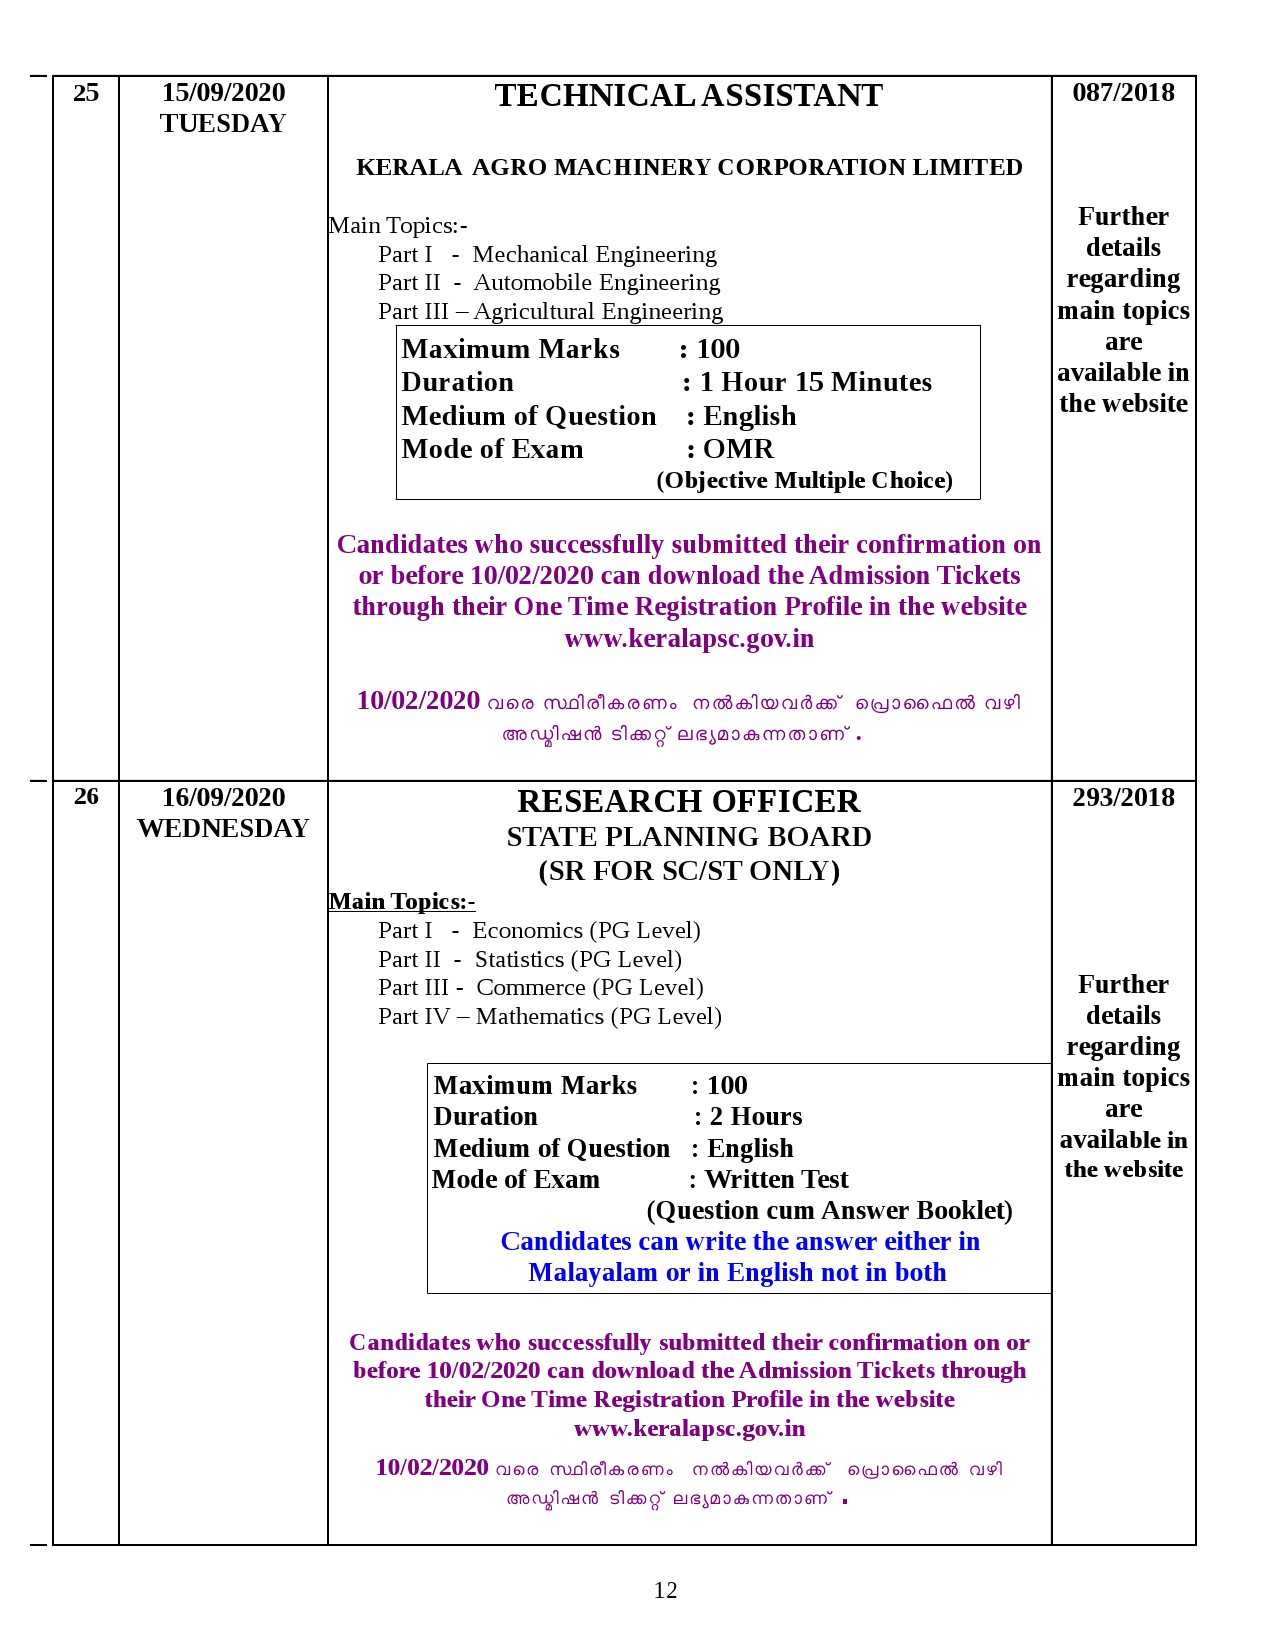 Kerala PSC Exam Calendar September 2020 - Notification Image 12